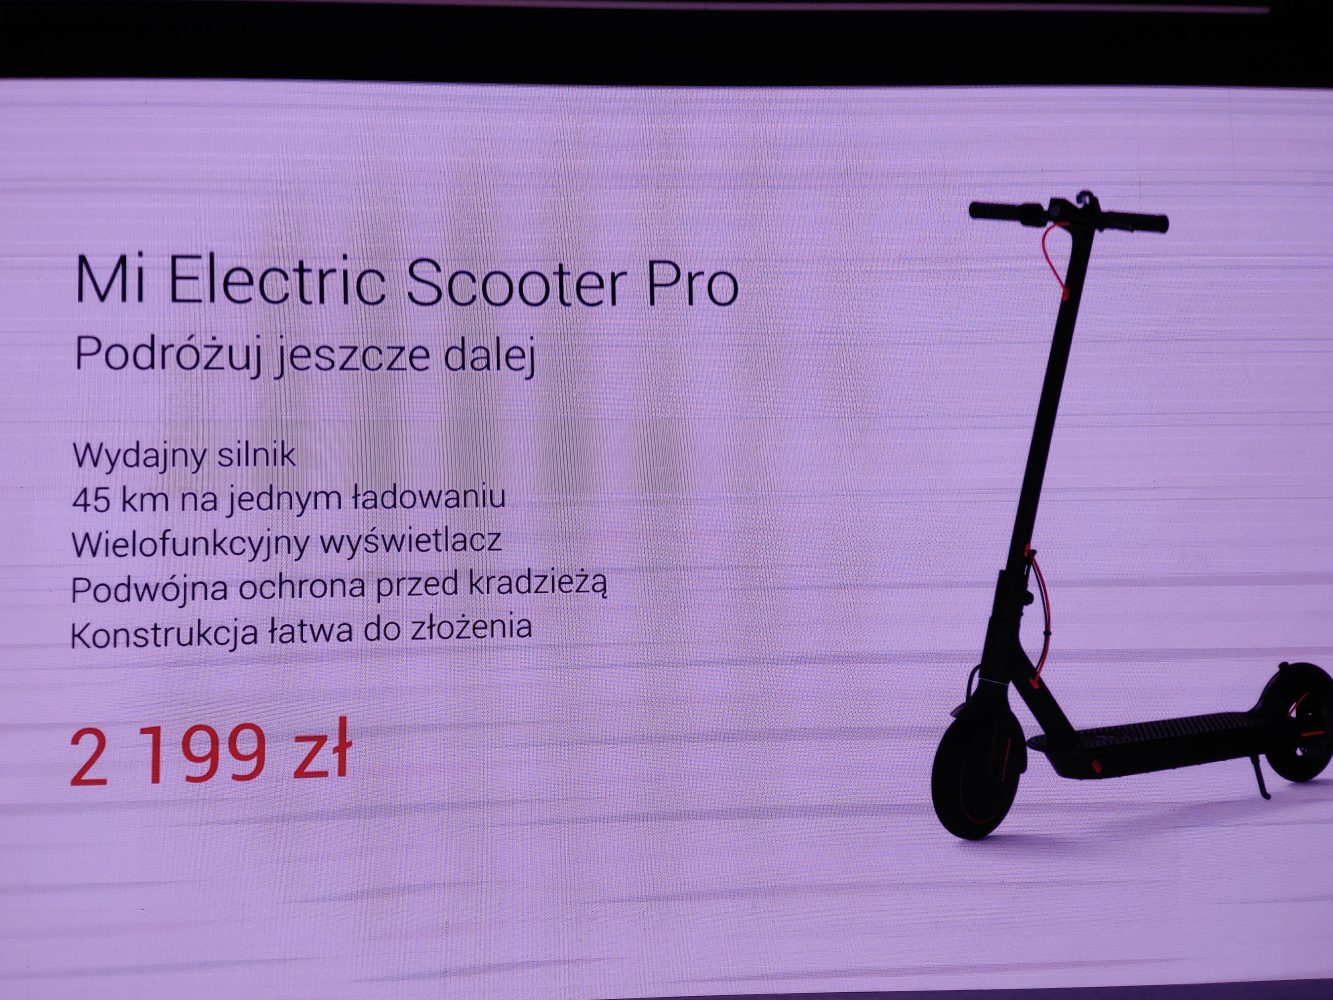 Xiaomi Mi Electric Scooter Pro